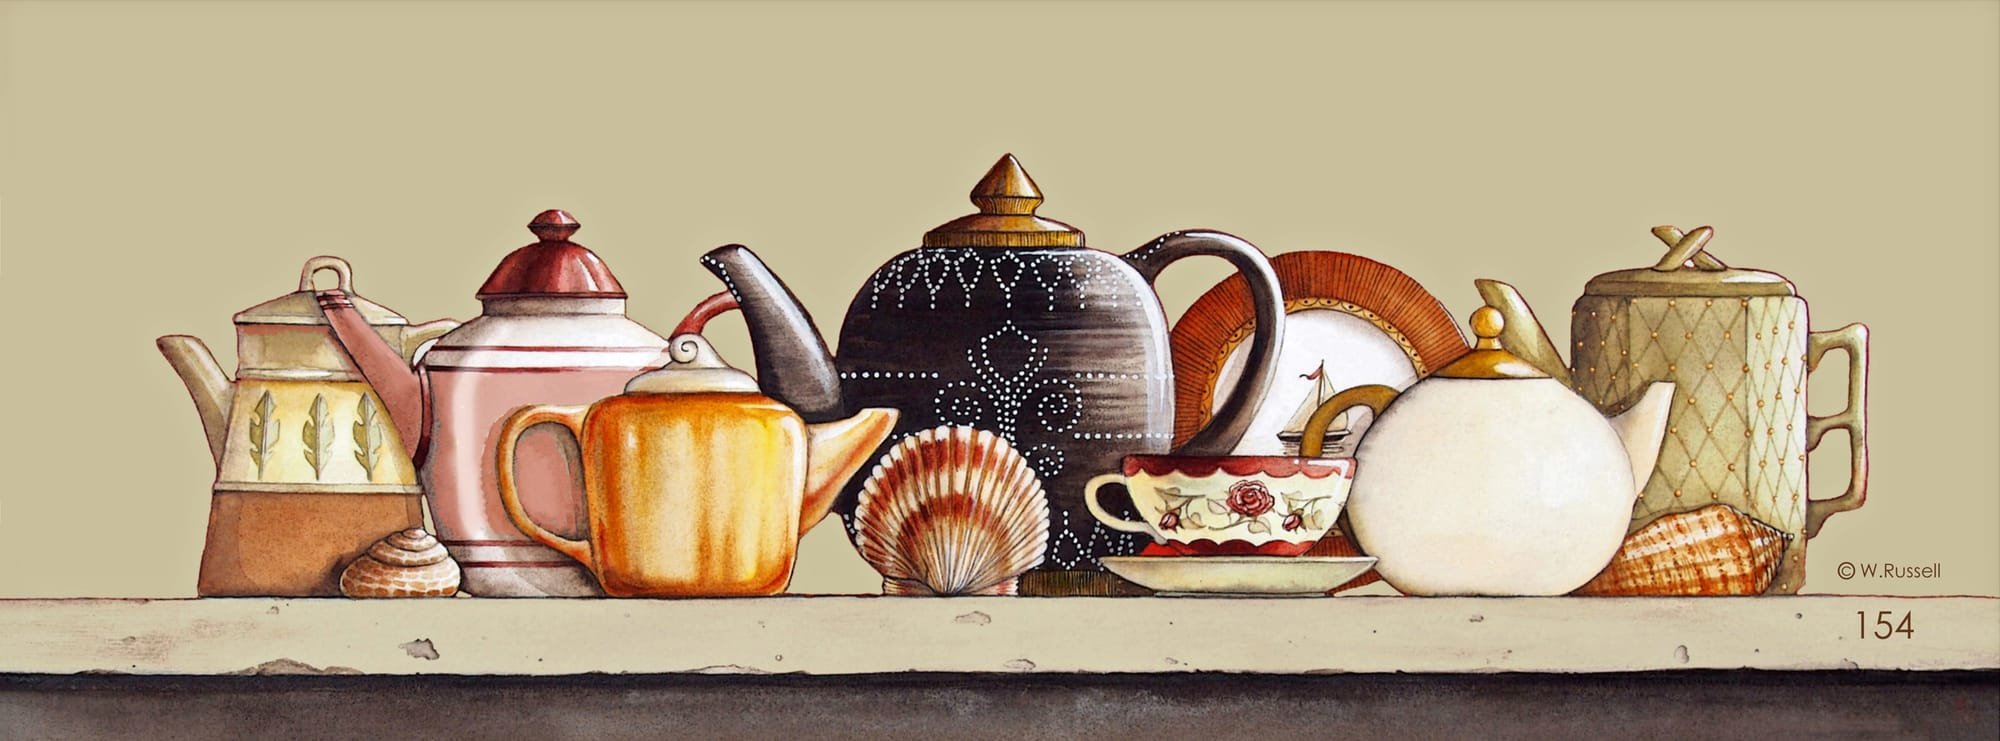 Coastal Teapot Collection with Seashells